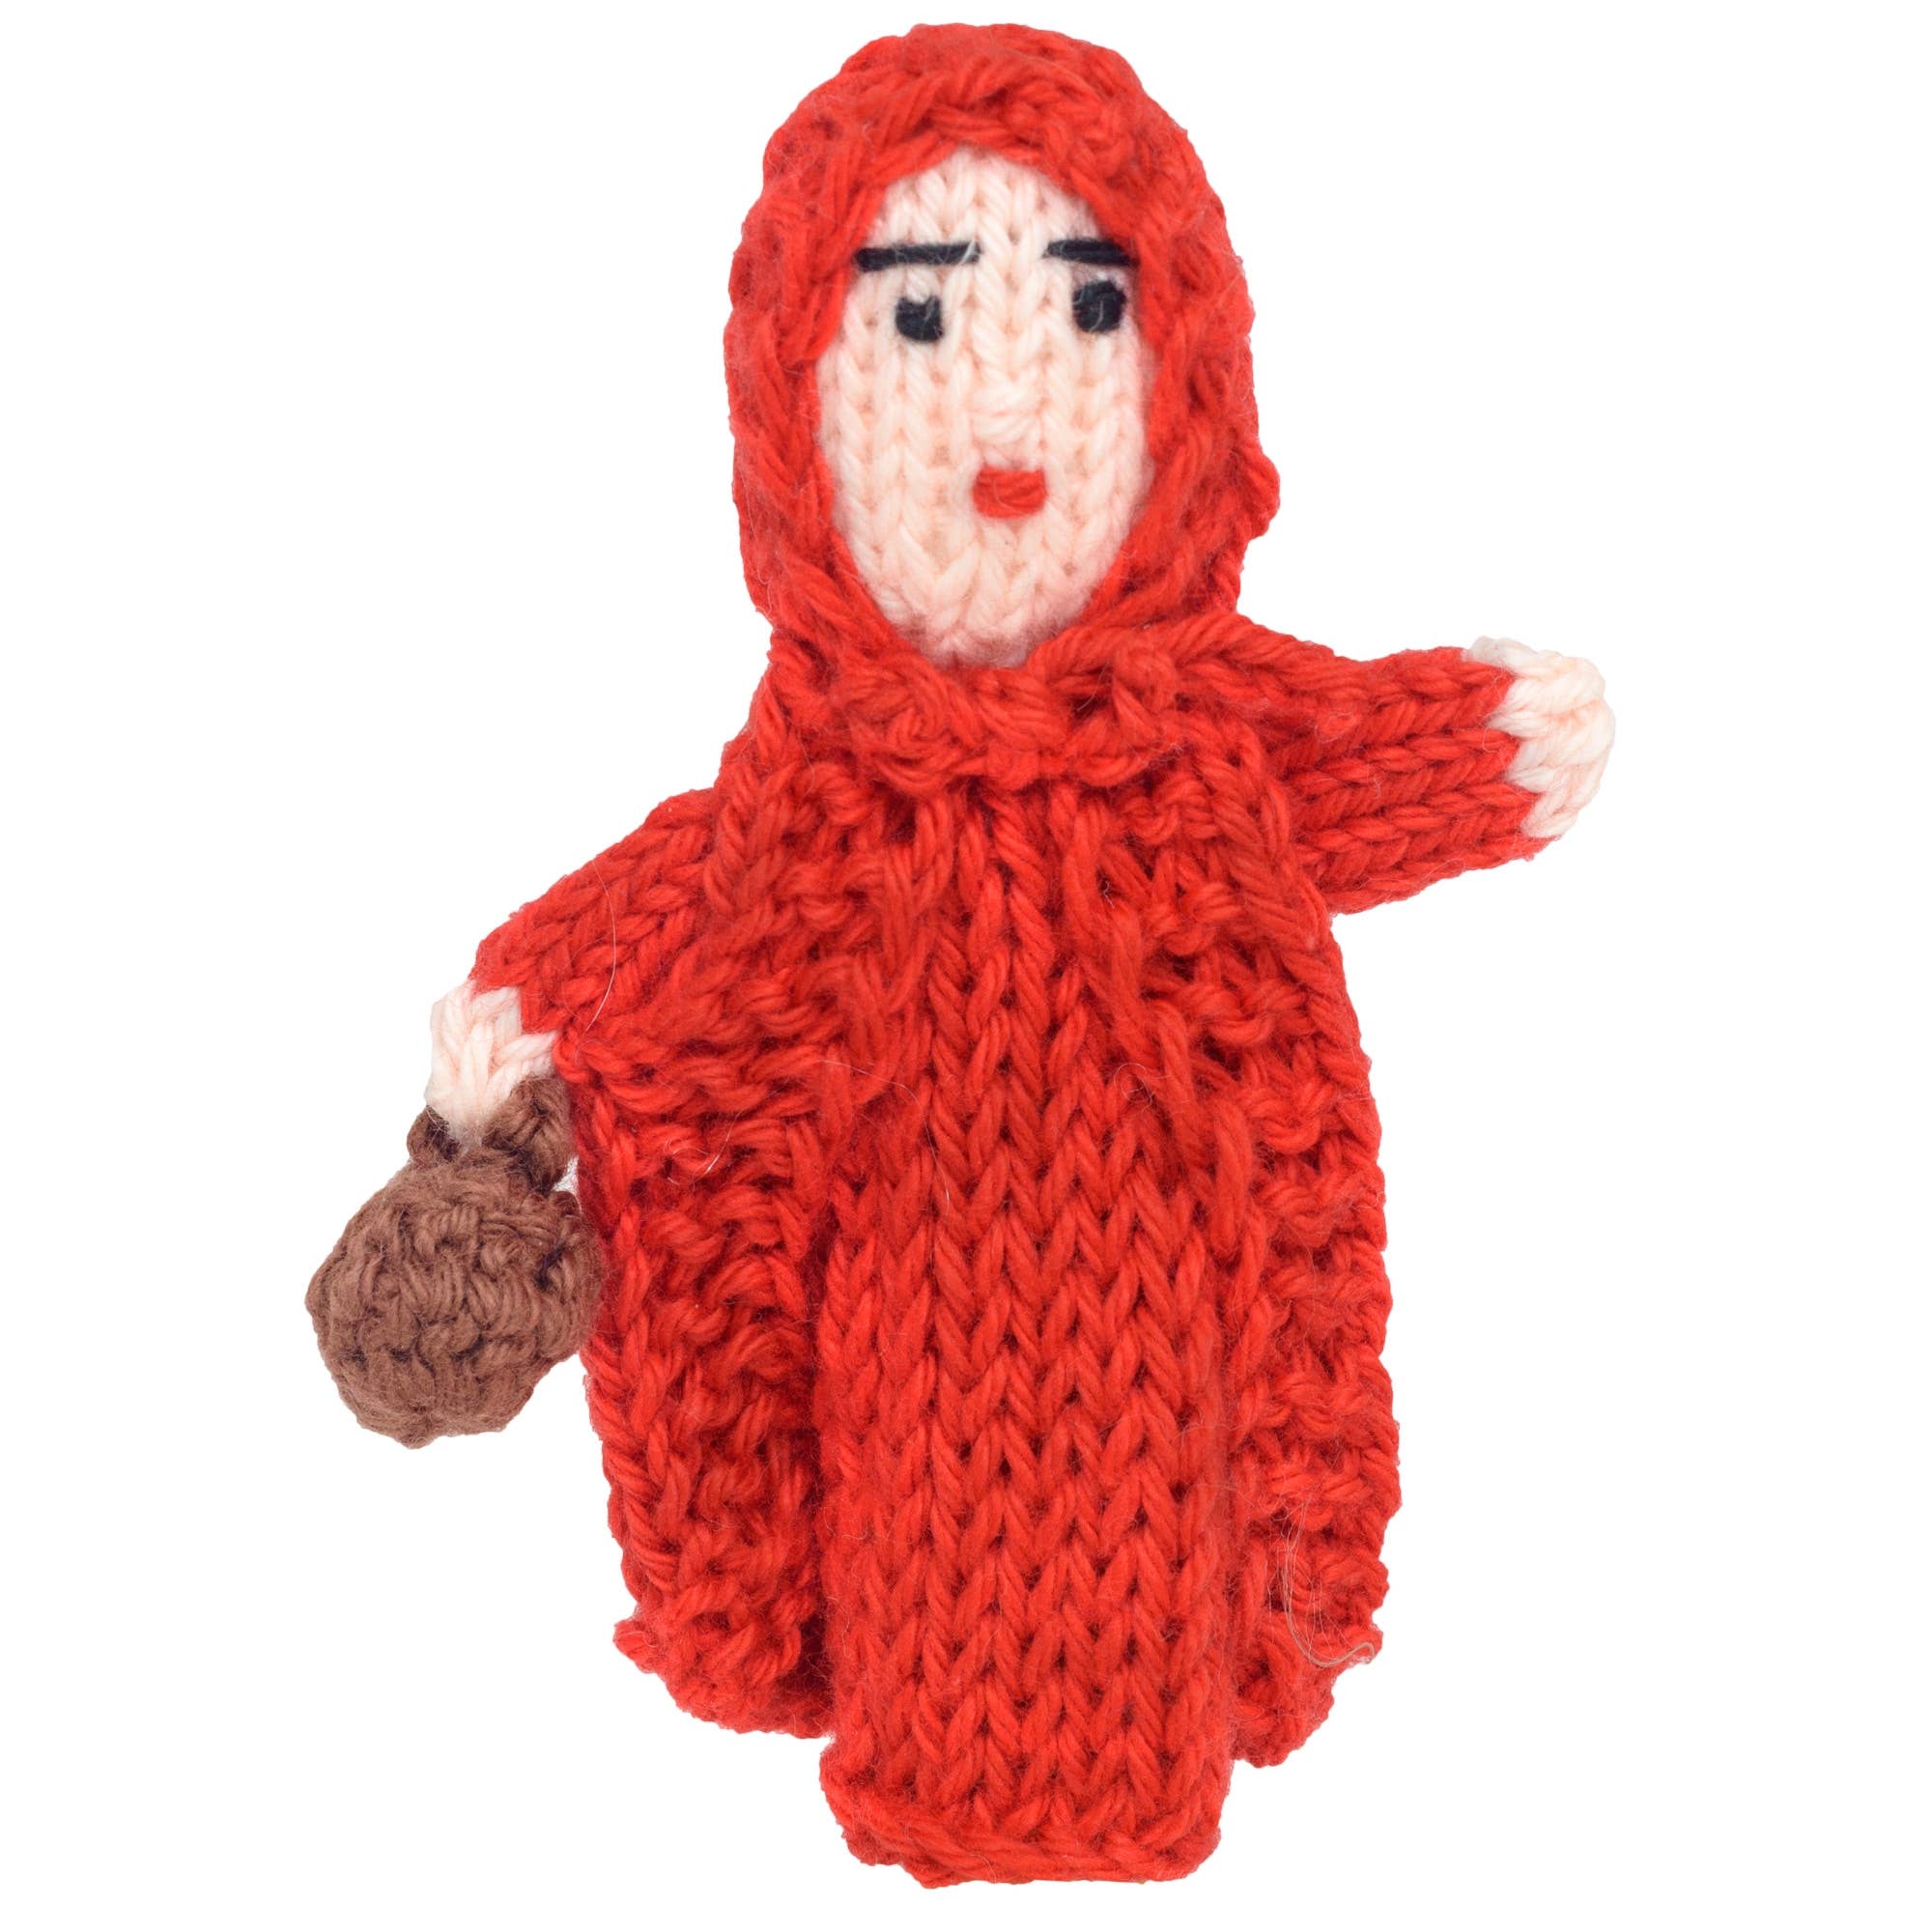 Little Red Riding Hood - Bright Organic Cotton Finger Puppet